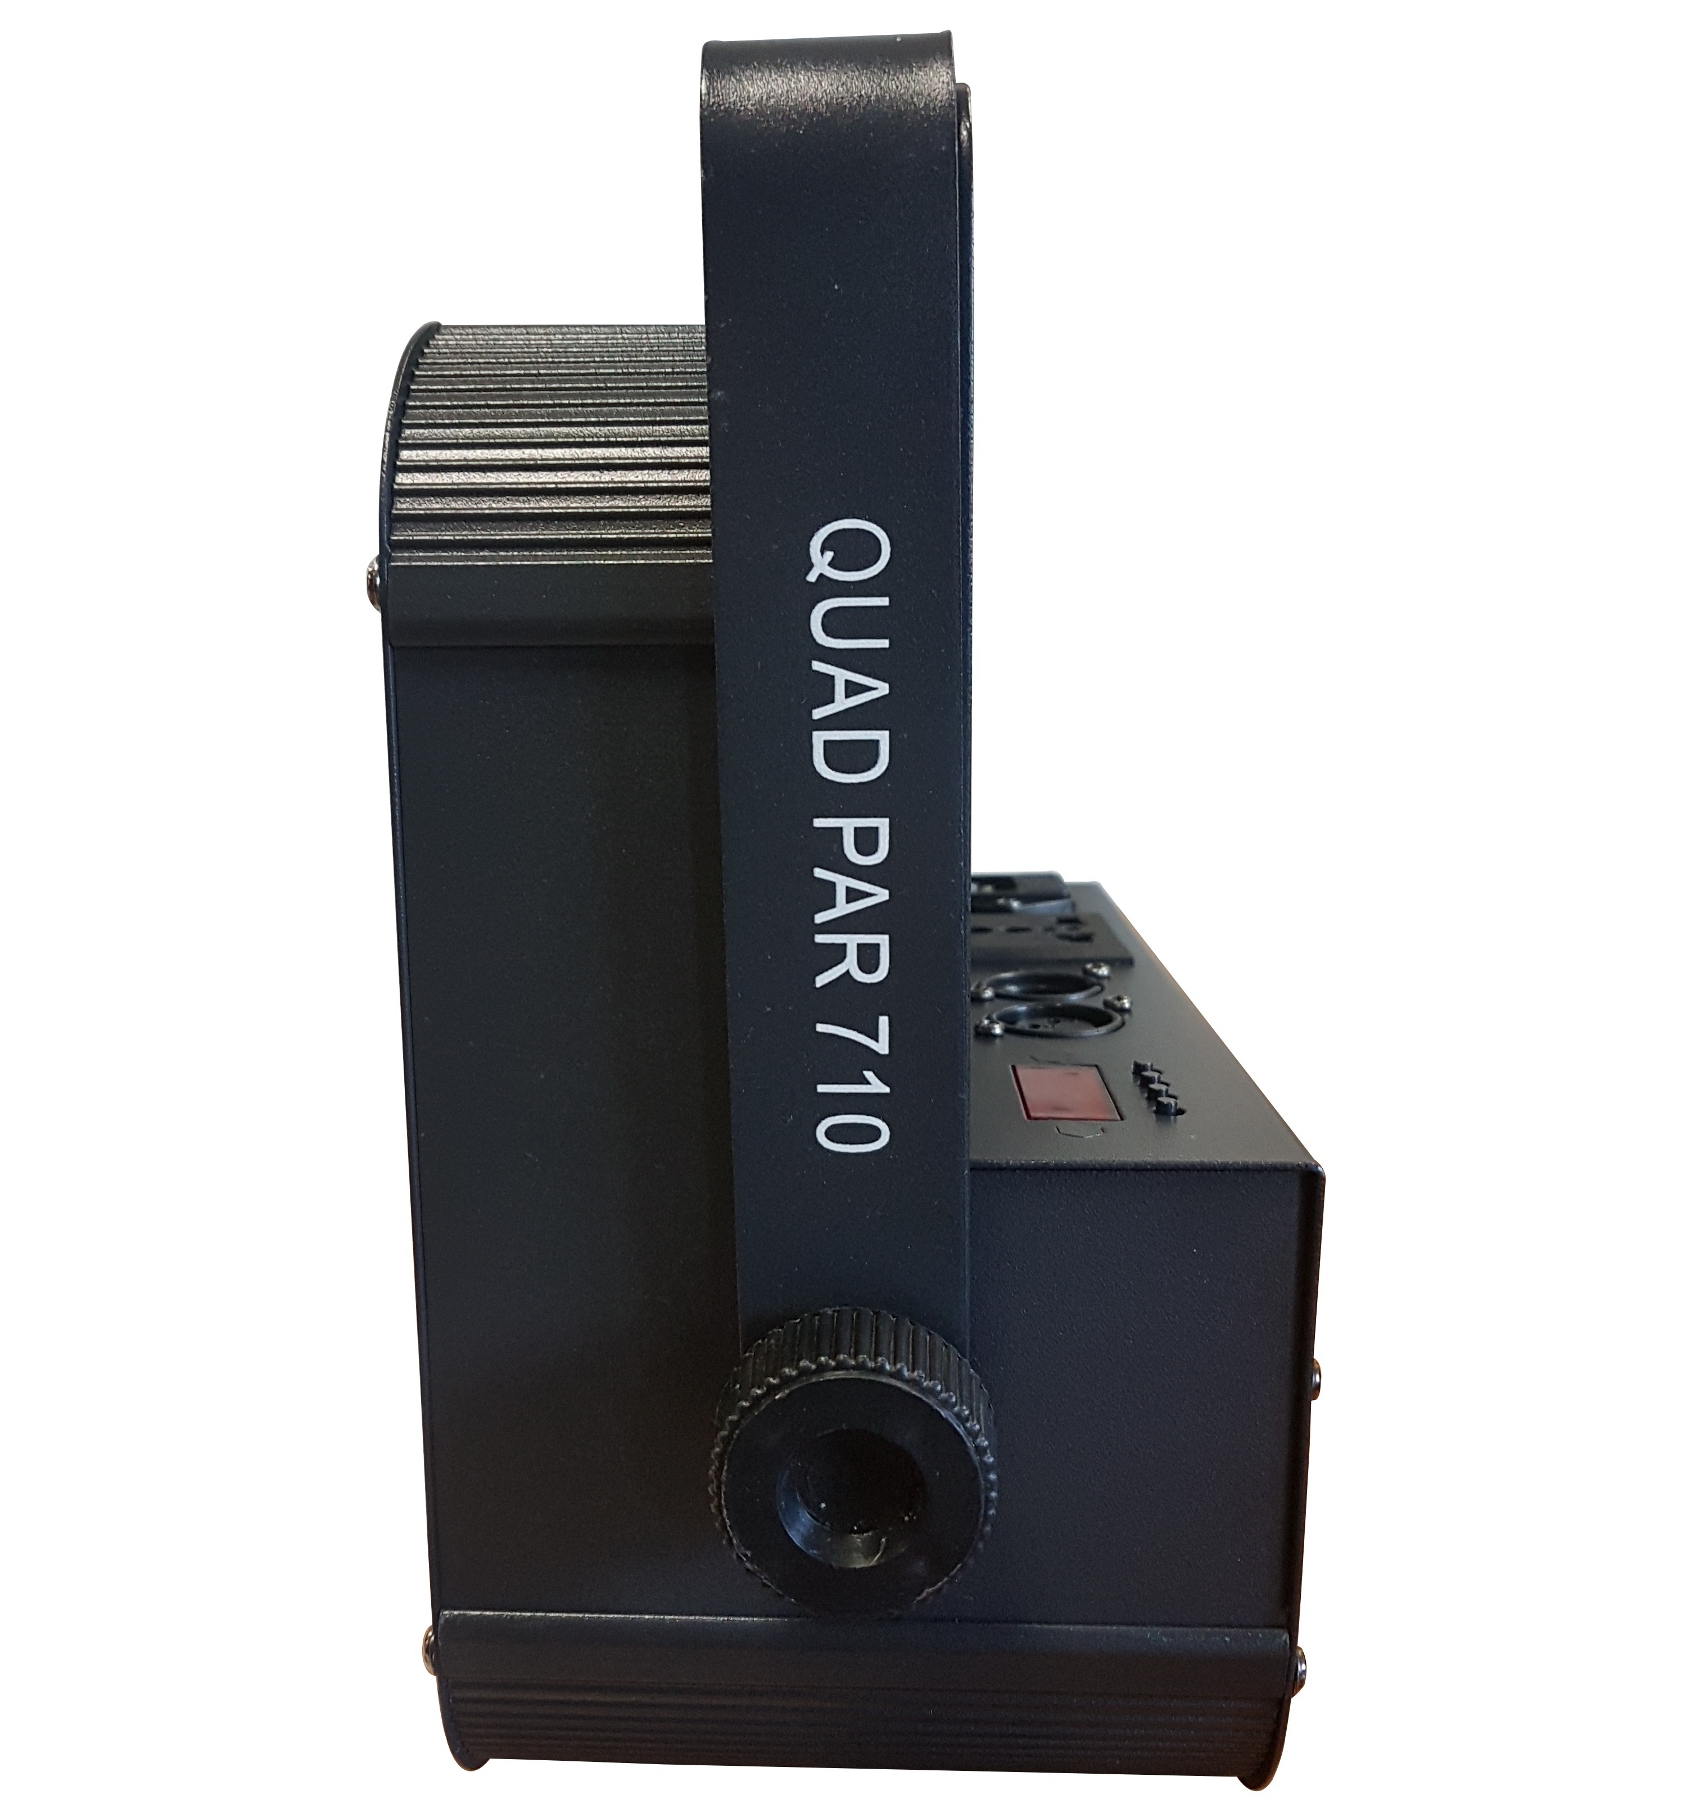 EXTREME QUAD PAR 710 LED 70 WATT 7 X 10W RGBW 4 IN 1 + CONTROLLO DMX – AUTO 1